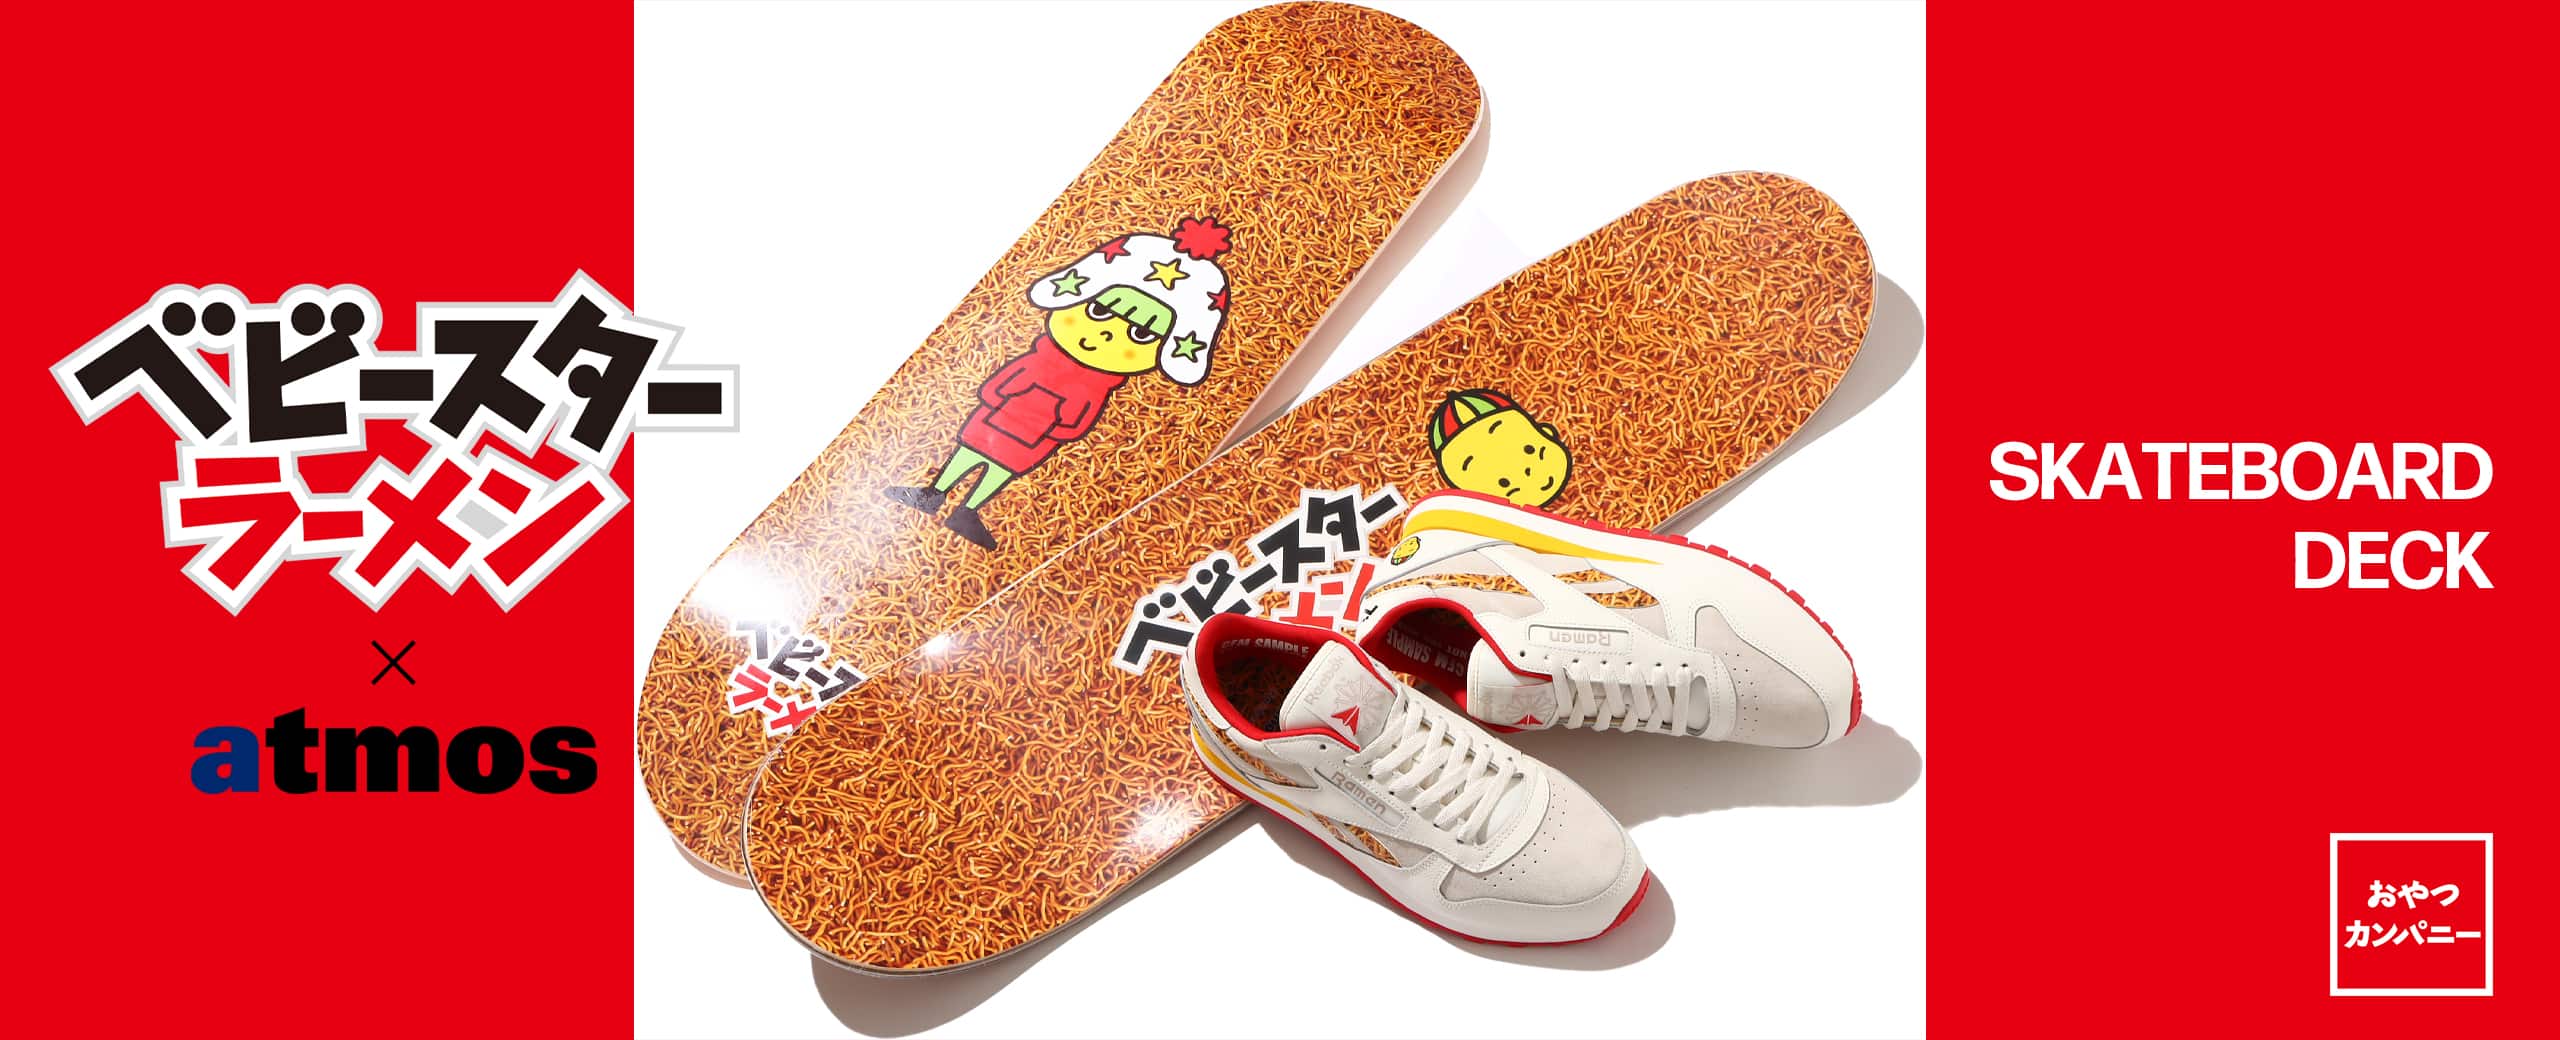 "BABY STAR x atmos Skateboard deck"